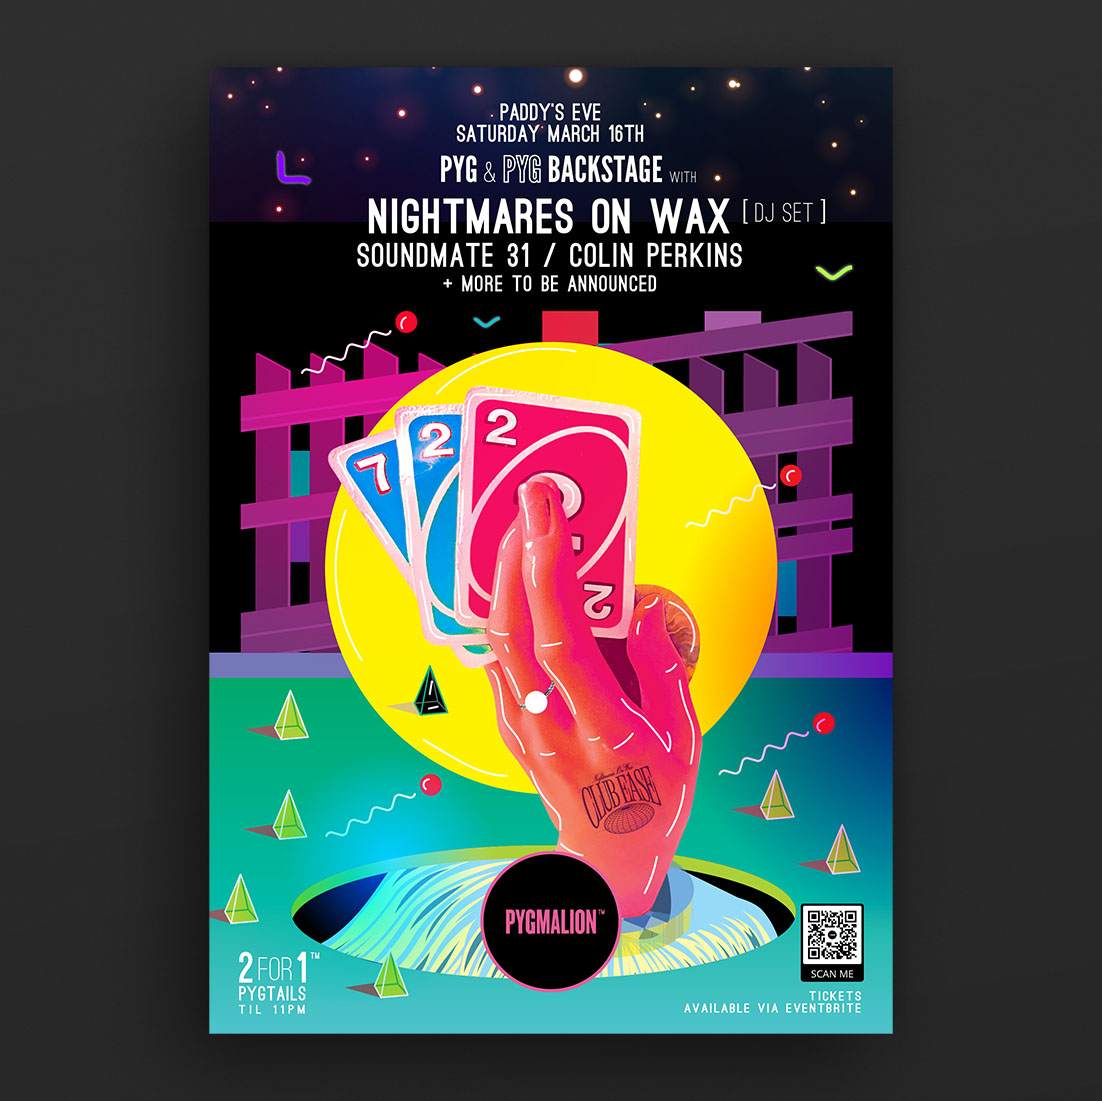 Pyg & Pyg Backstage with Nightmares on Wax, Soundmate31 & Colin Perkins - フライヤー表